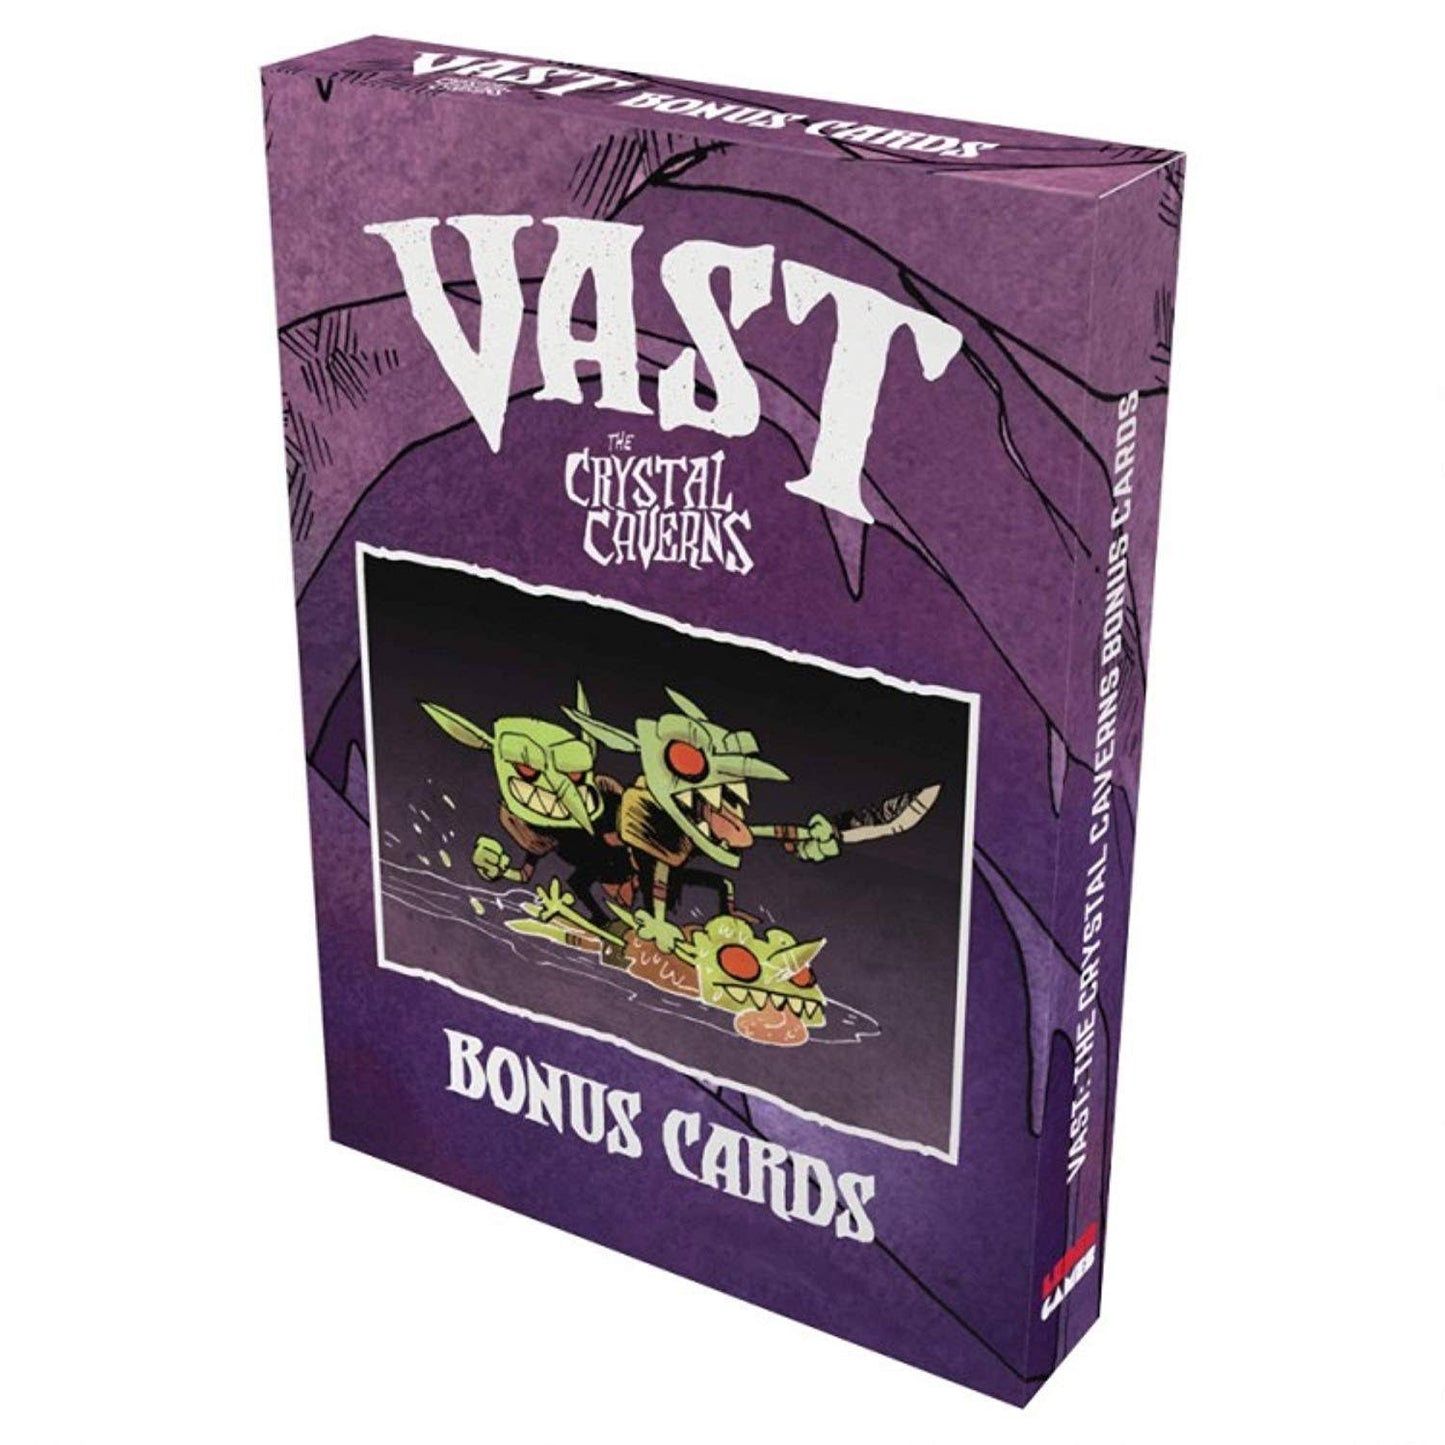 Vast: The Crystal Caverns - Bonus Cards - The Fourth Place